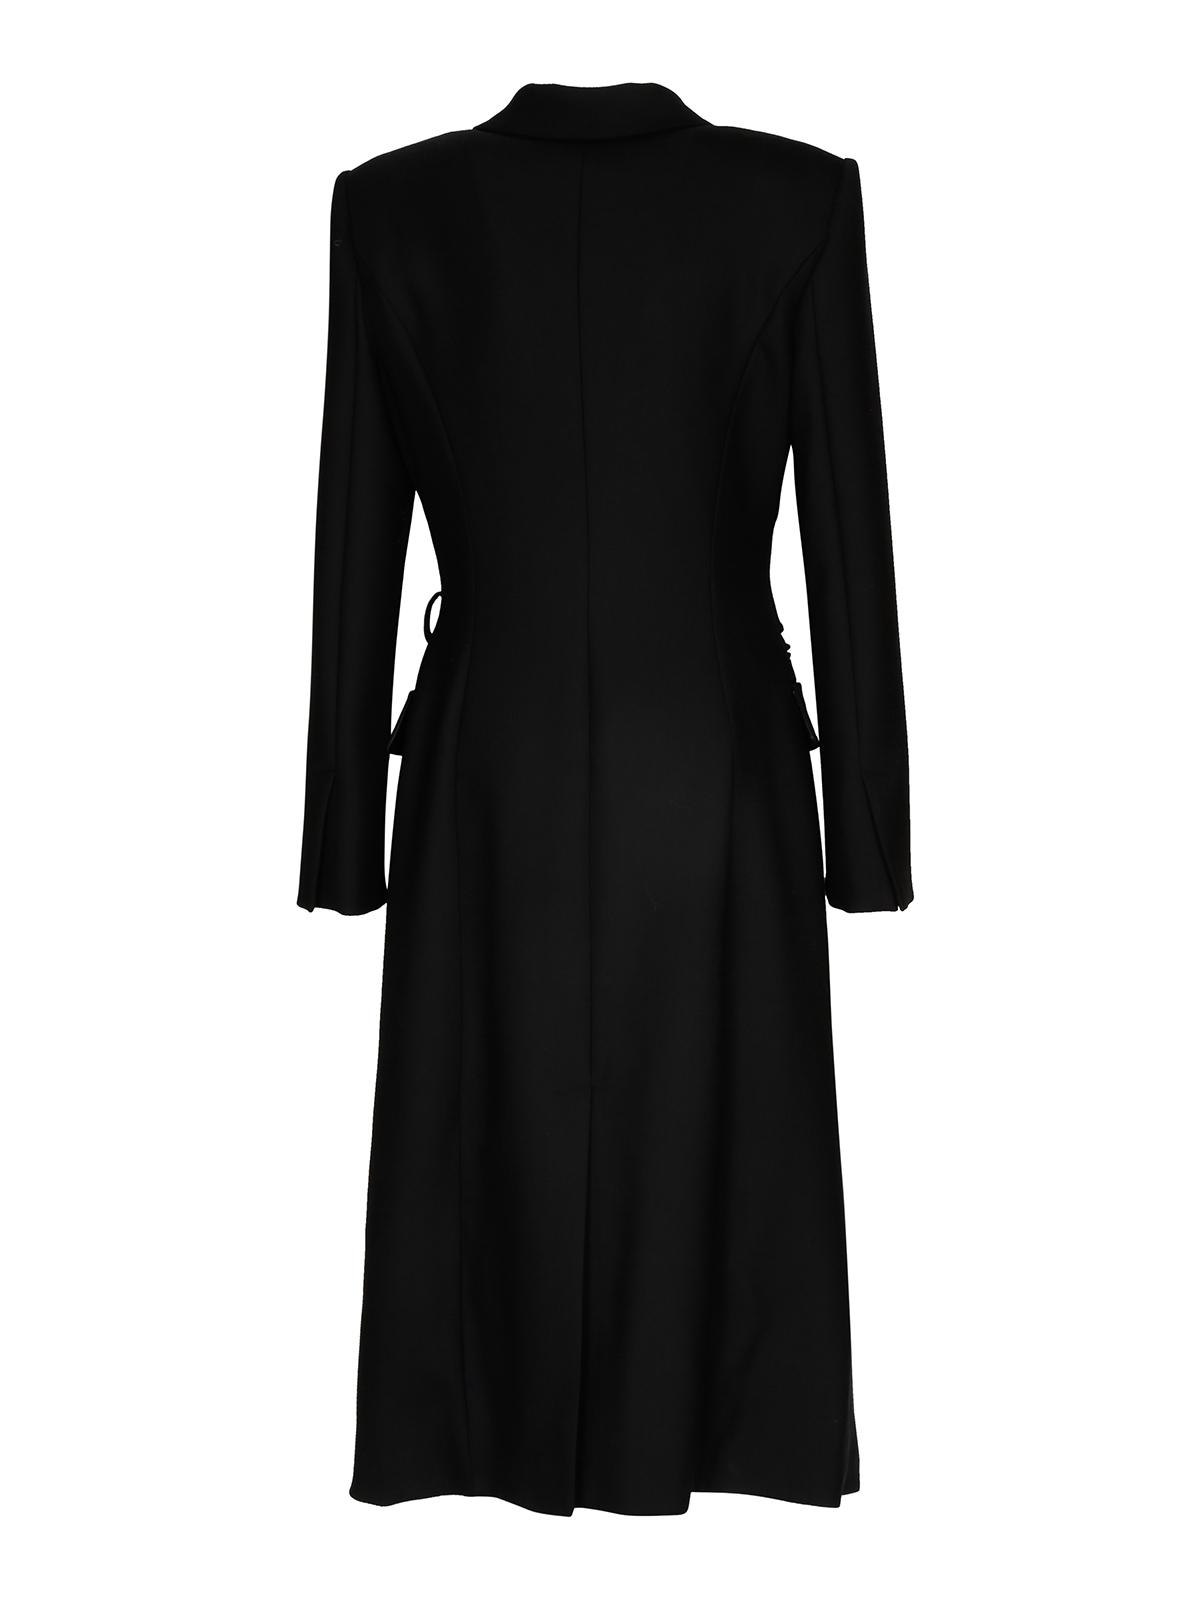 Elisabetta Franchi Wool Blend Double Breasted Coat in Black - Lyst